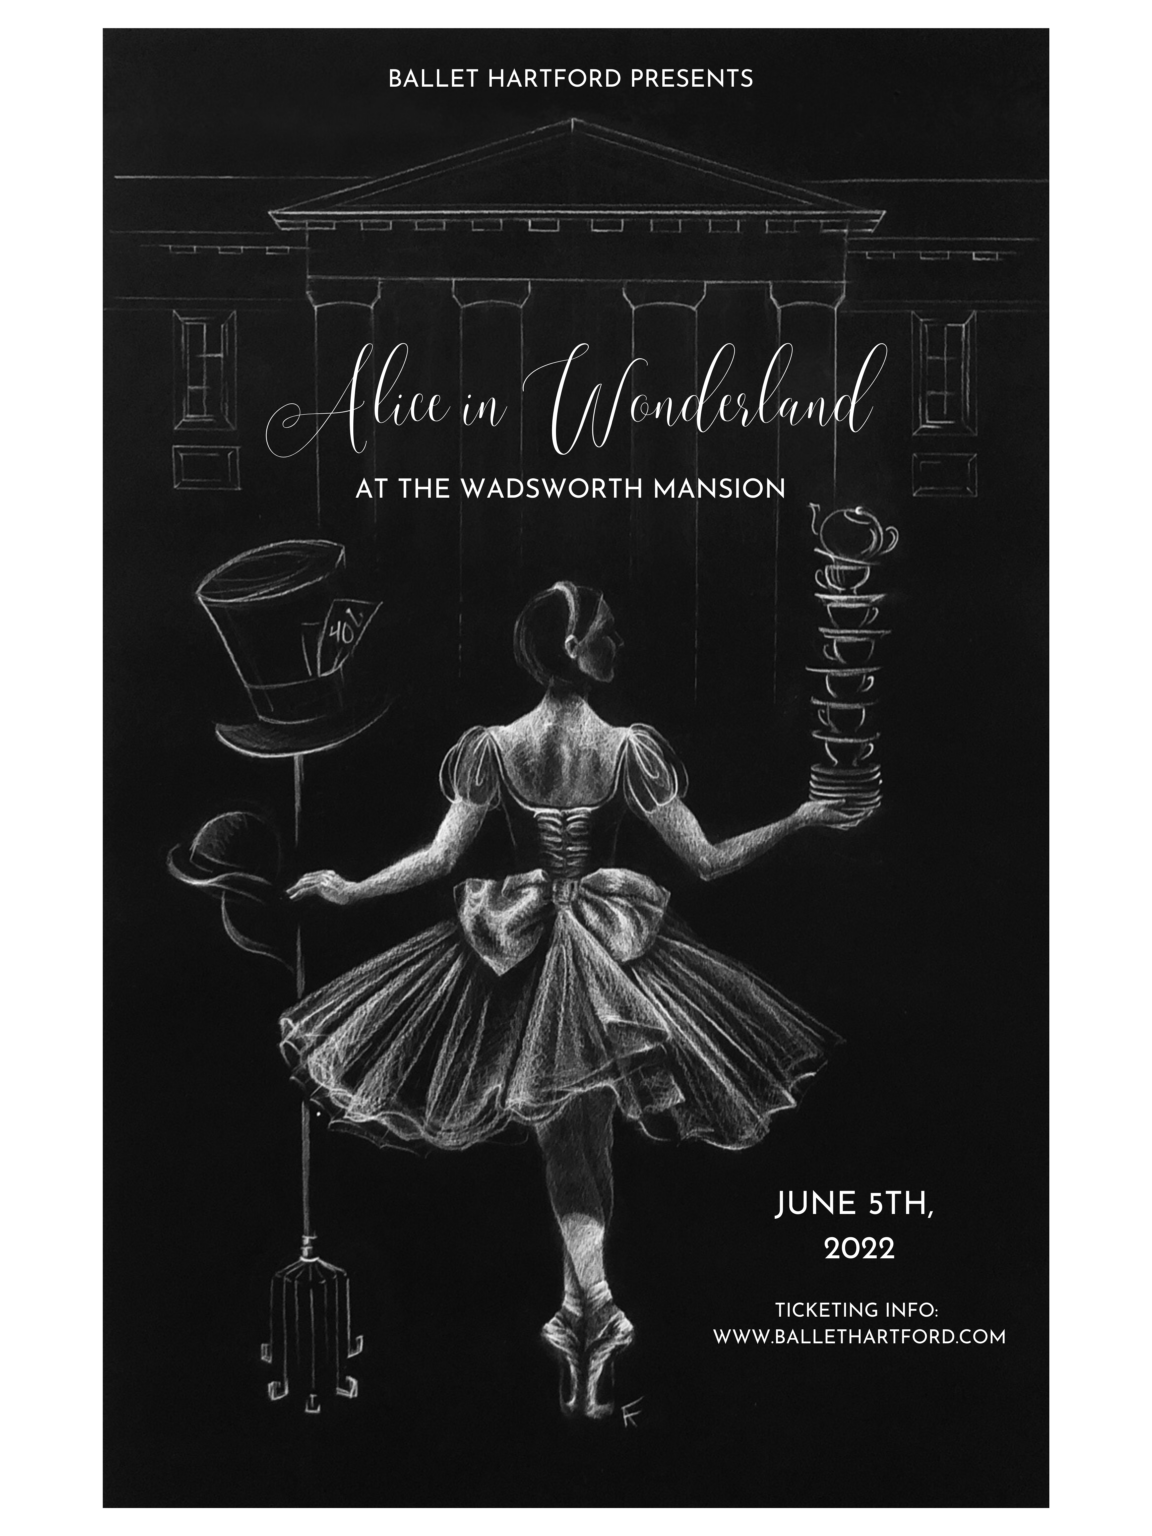 Ballet Hartford presents Alice in Wonderland at the Wadsworth Mansion June 5th, 2022